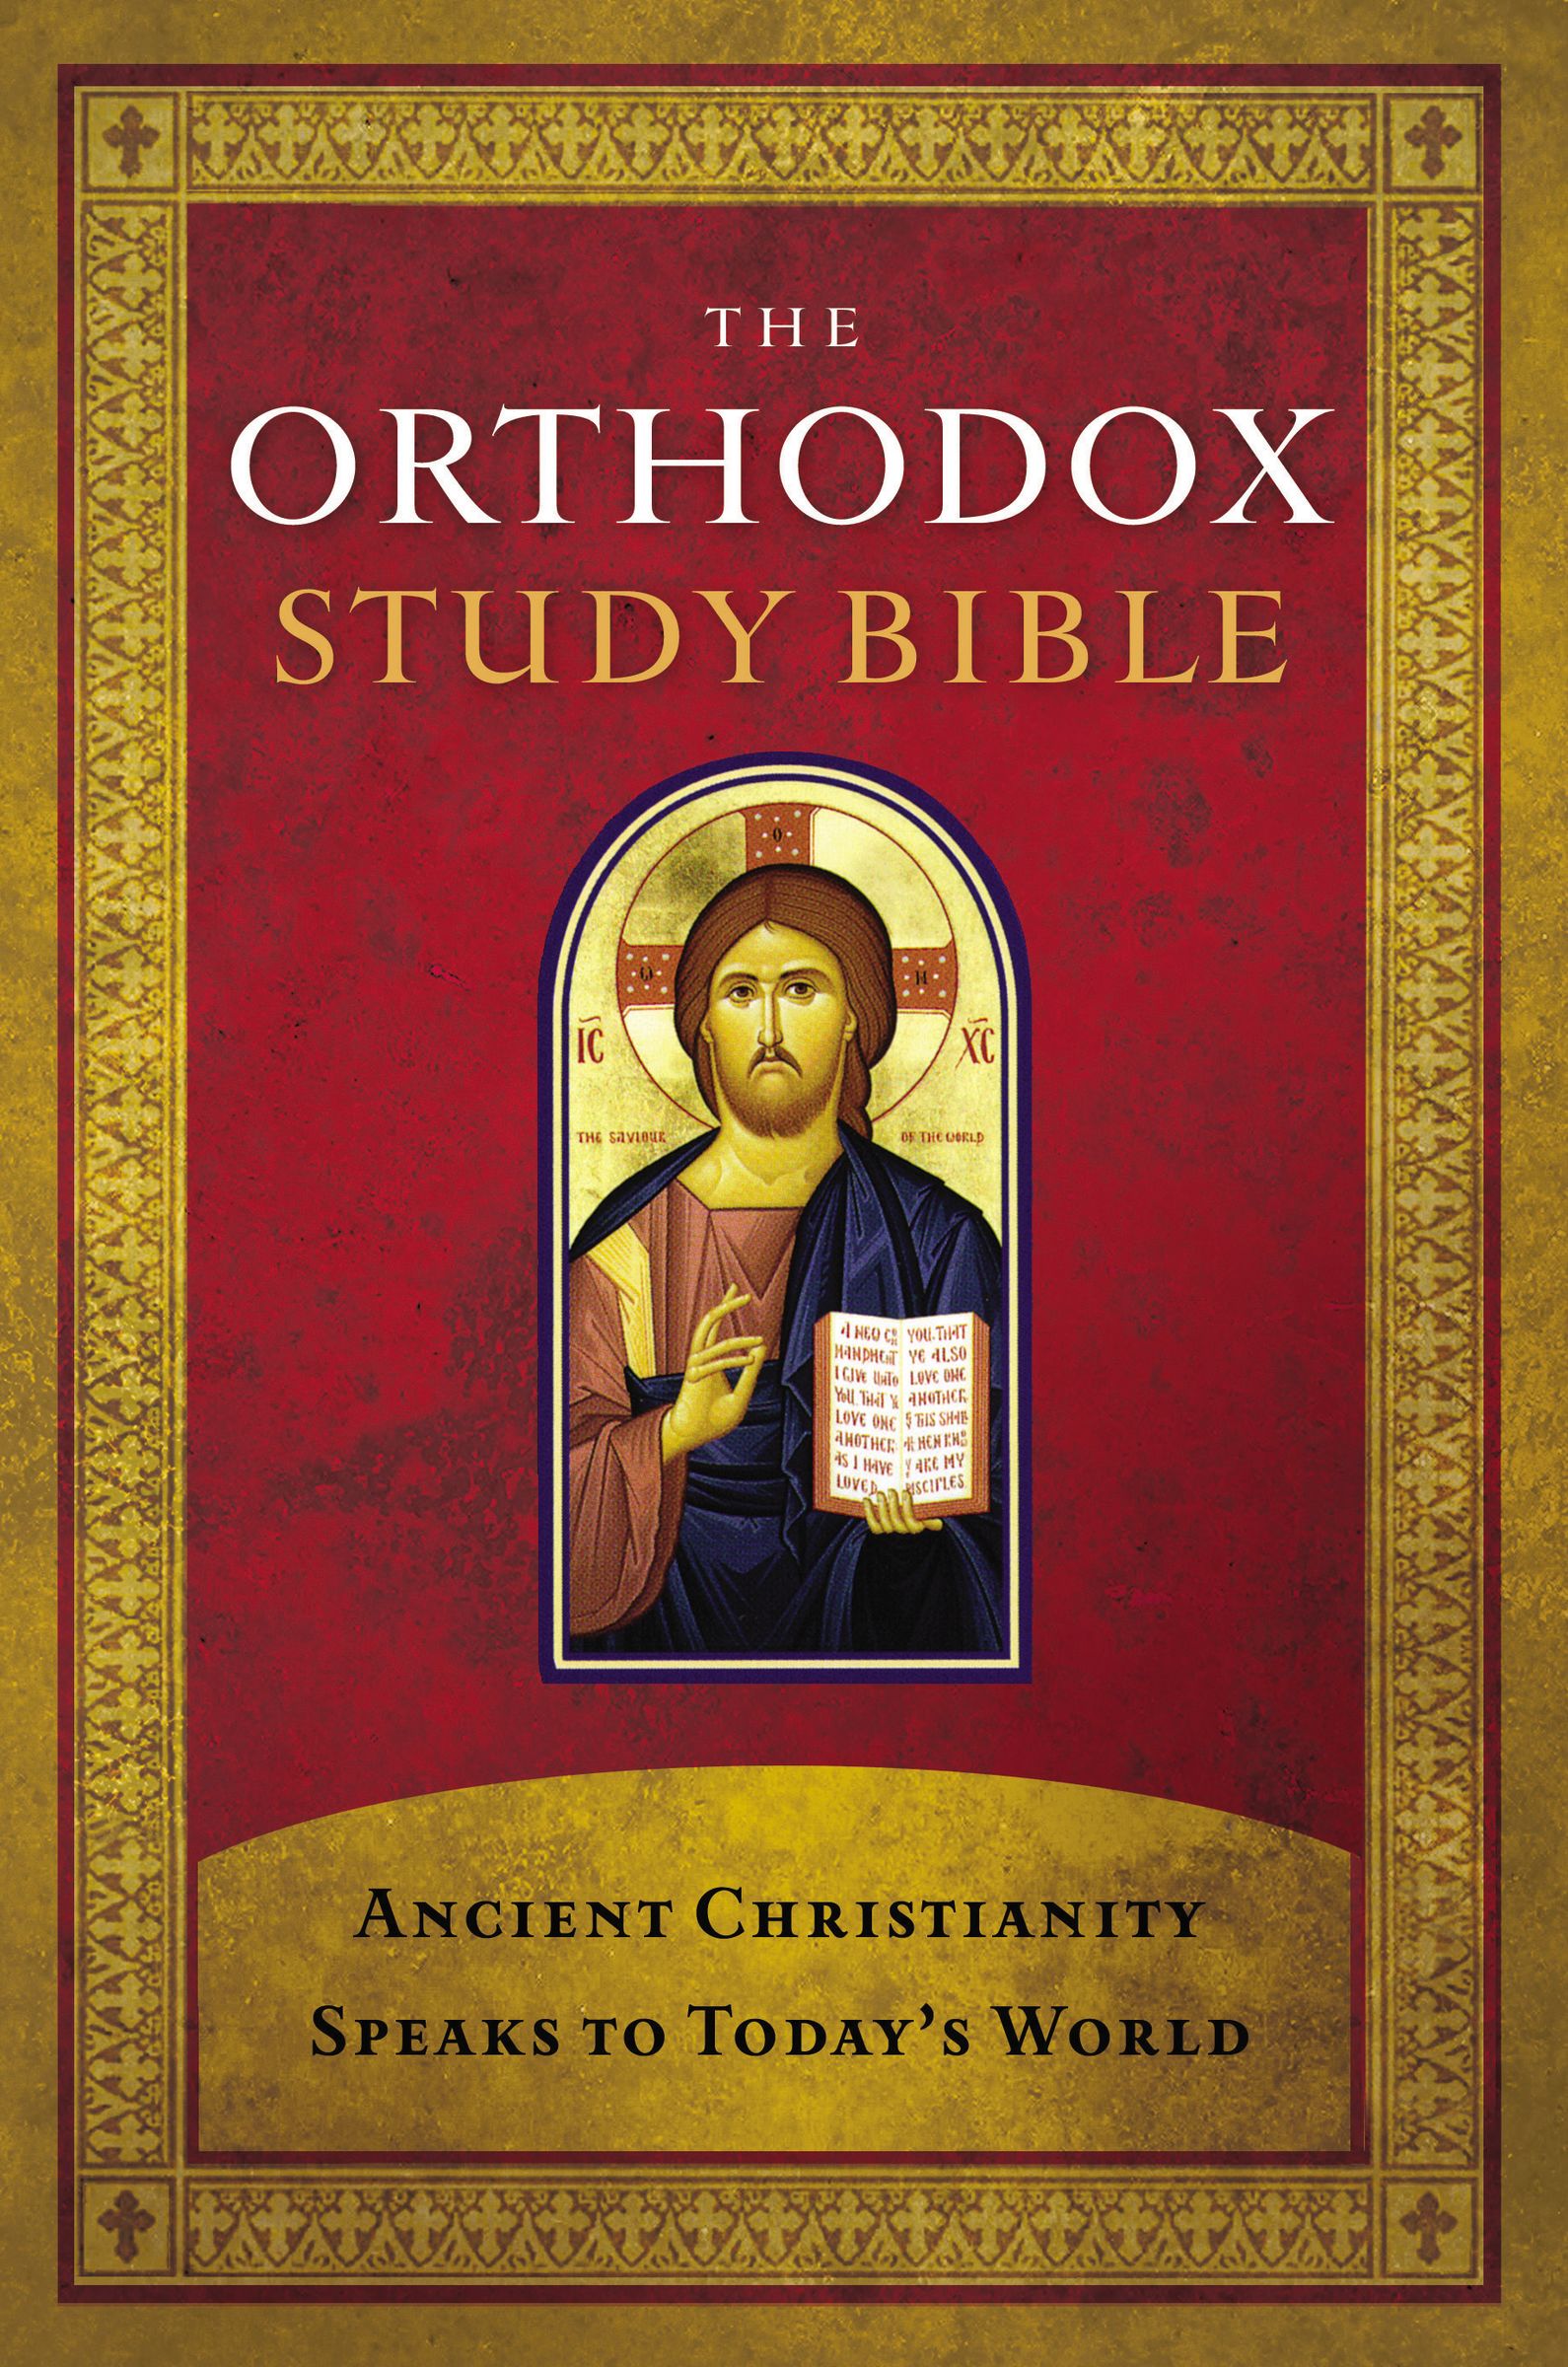 The Orthodox Study Bible - 15-24.99